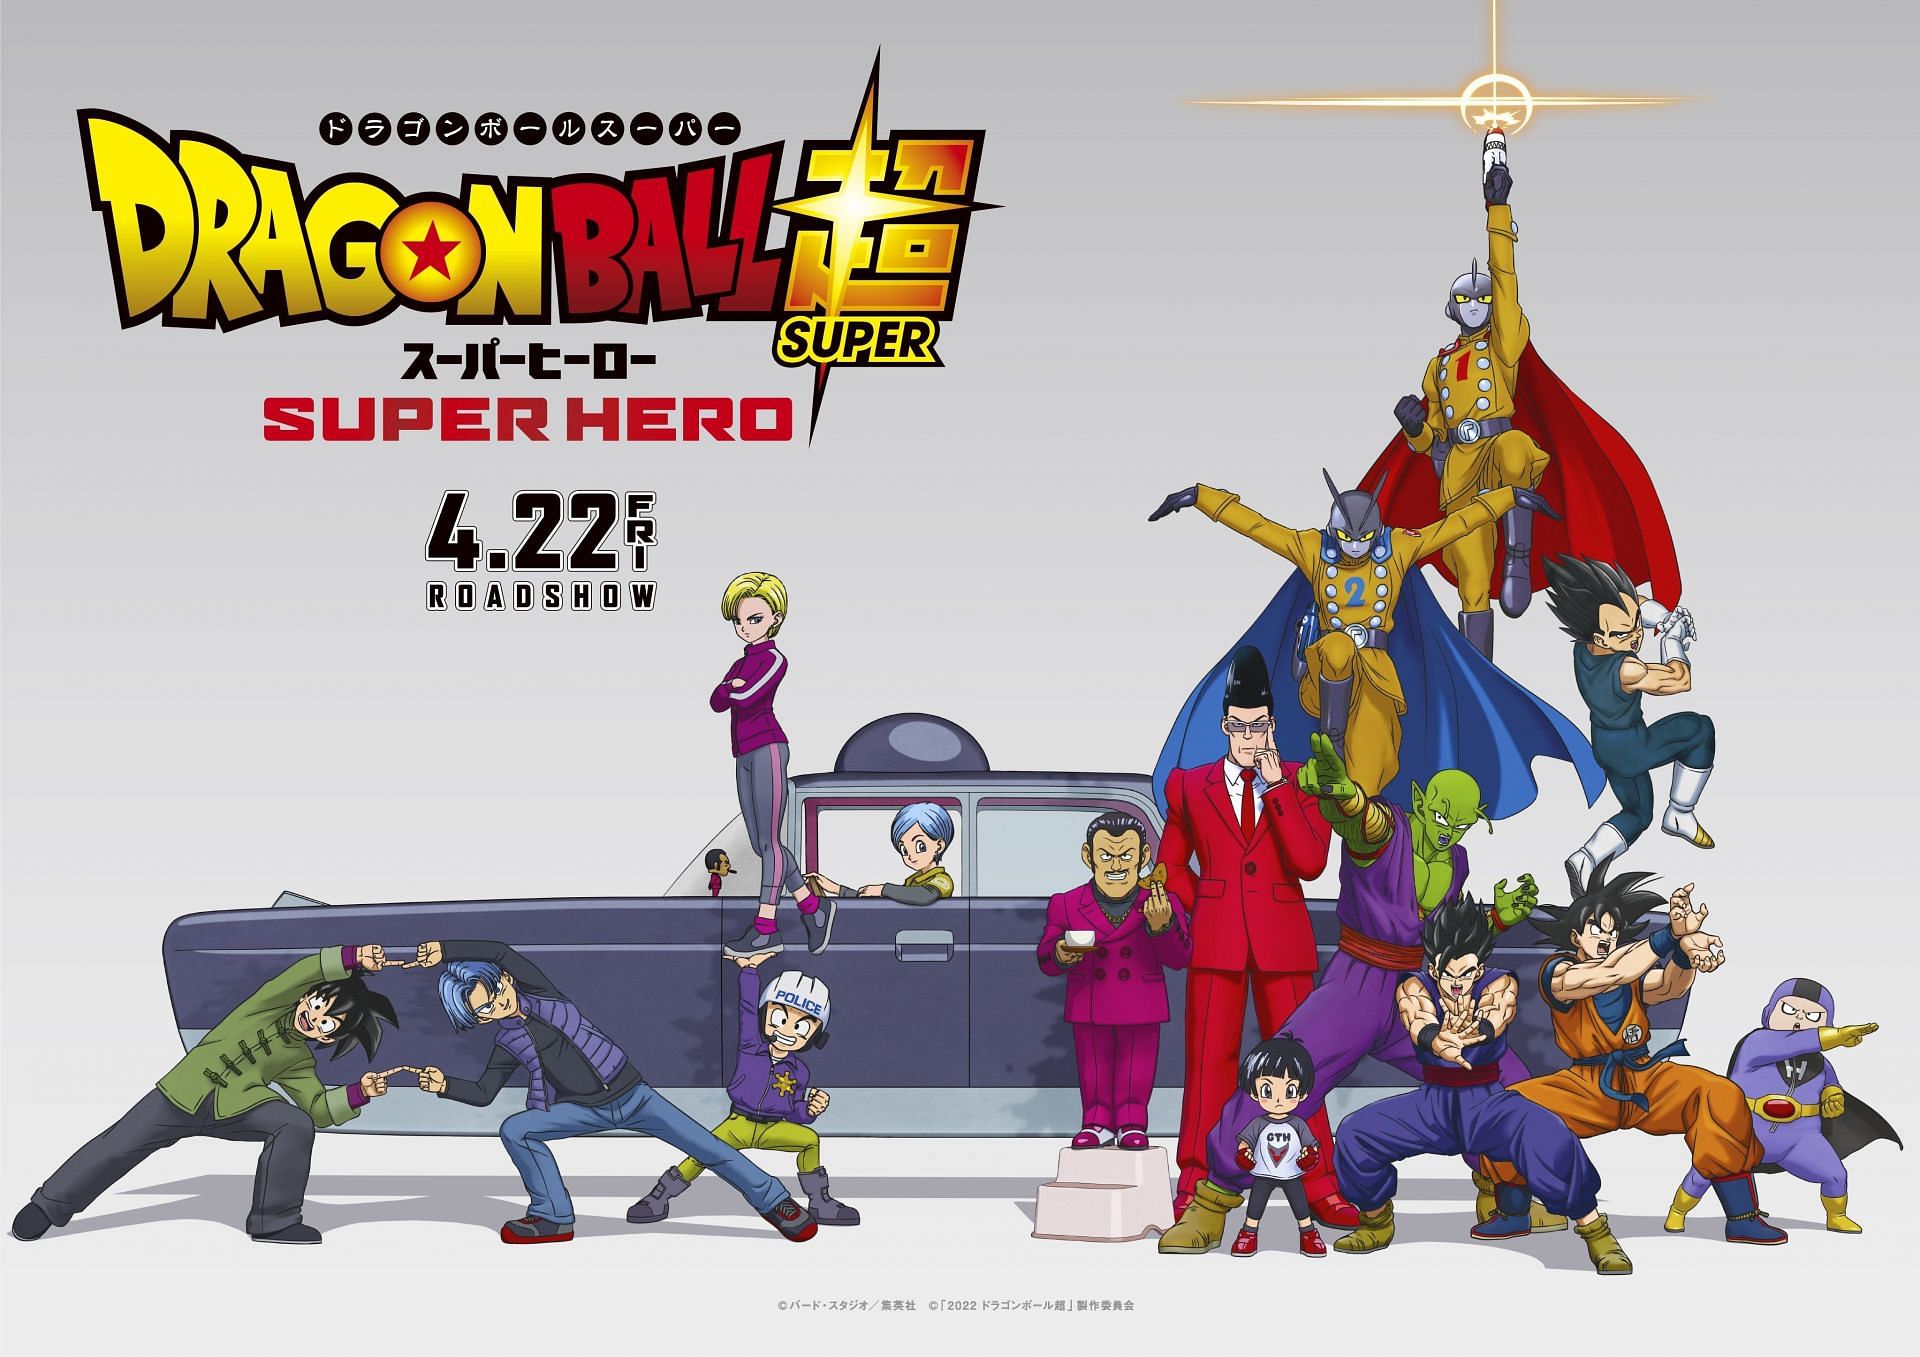 Dragon Ball Super: Super Hero Poster (Image via Toei Animation)